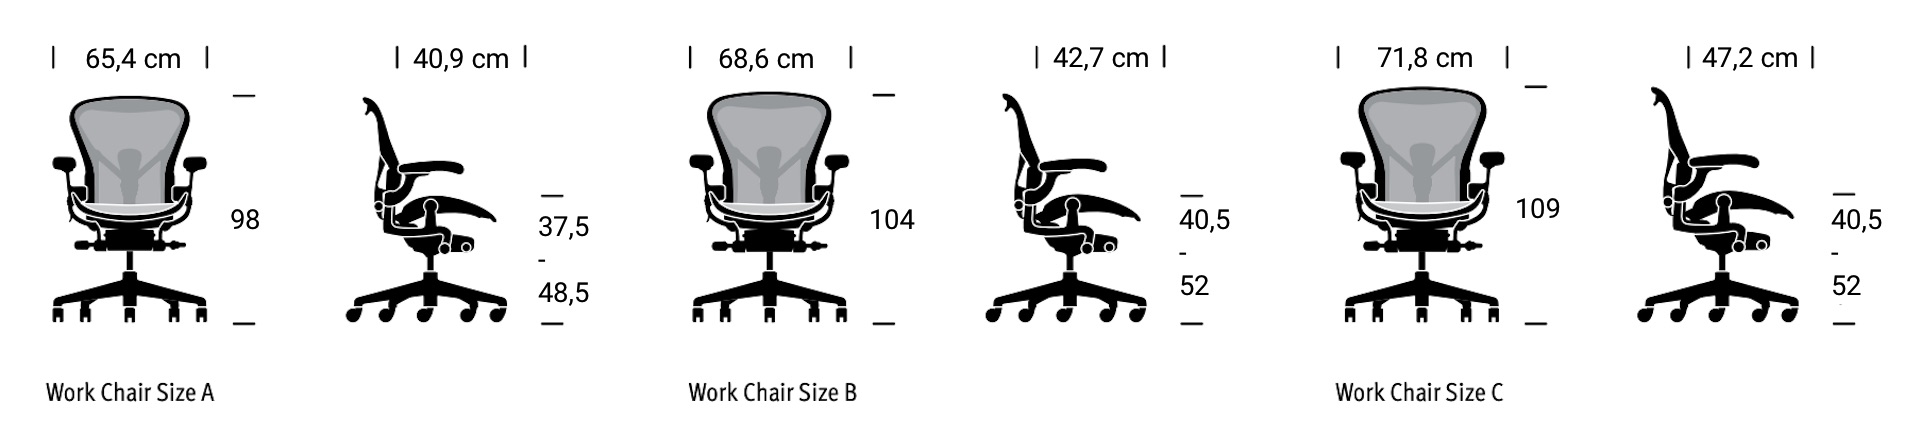 https://www.designcabinet.de/media/image/3b/7d/3e/aeron-chair-sizes-a-b-c-metric.jpg